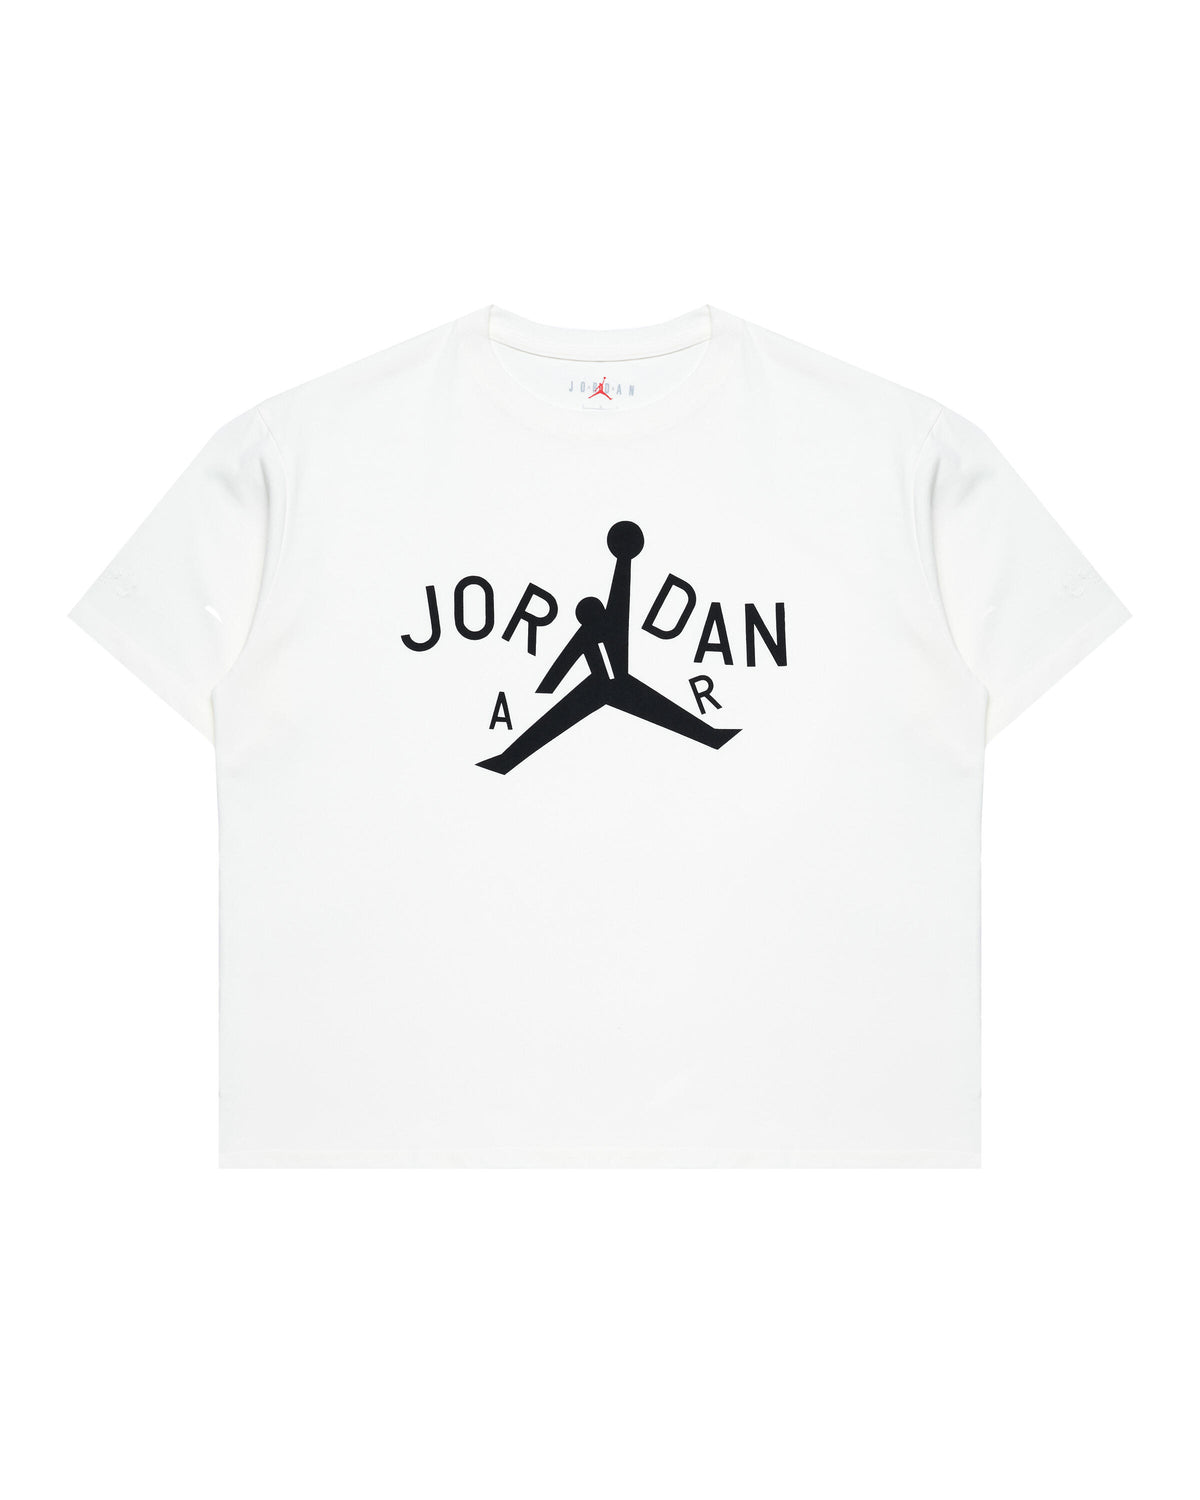 Air Jordan x Nina Chanel Abney Tee